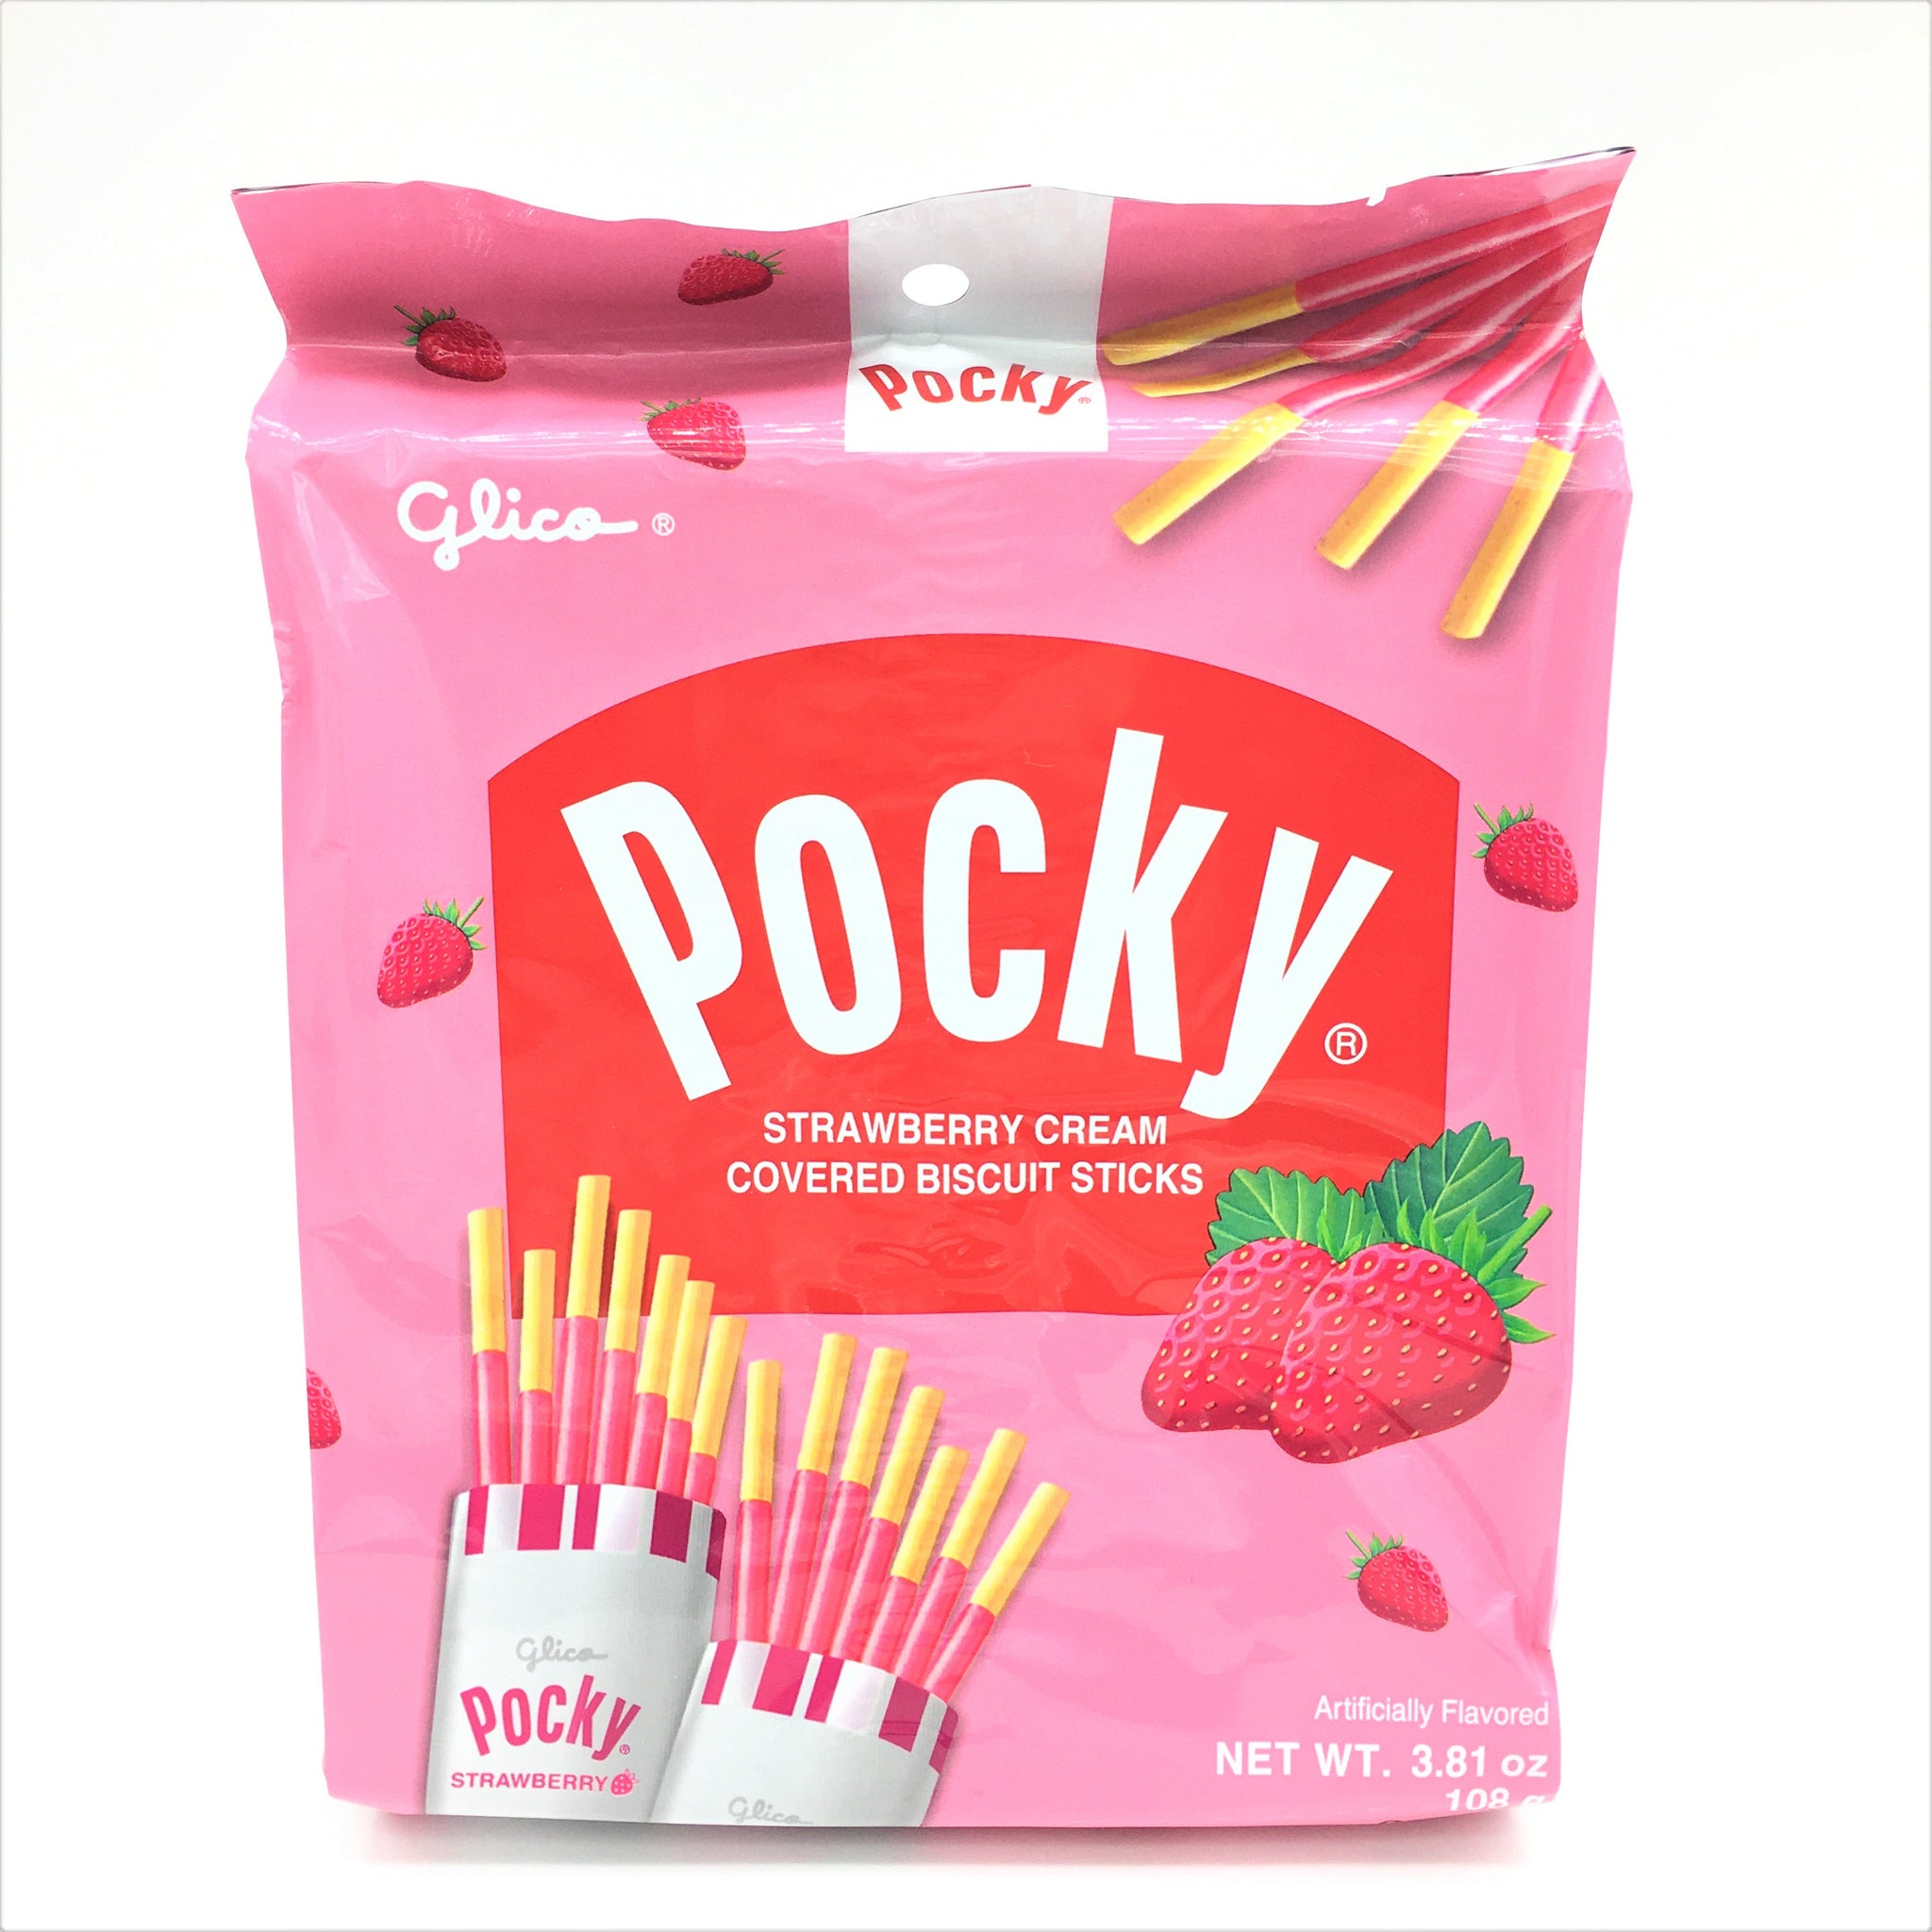 Glico Pocky Strawberry Cream Covered Biscuit Sticks 9 Packs